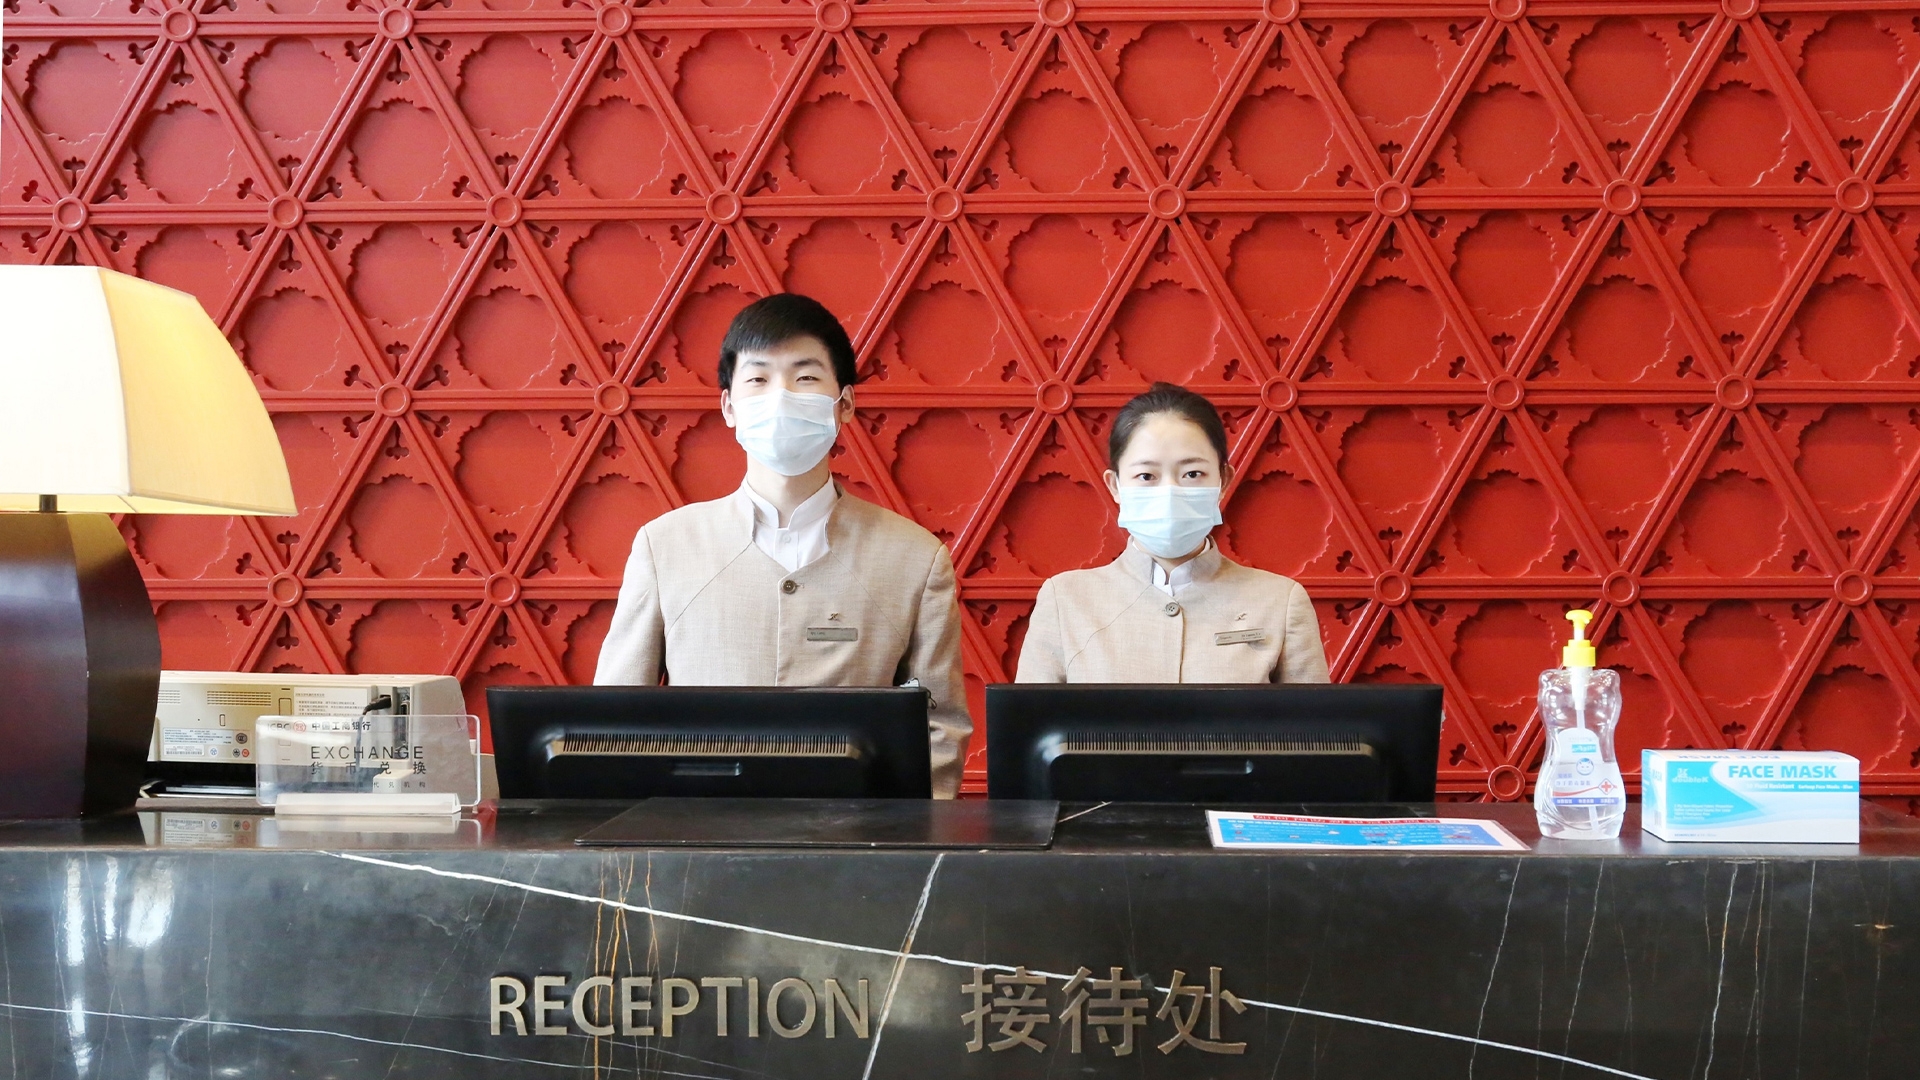 press-image-china-hotels-open.jpg